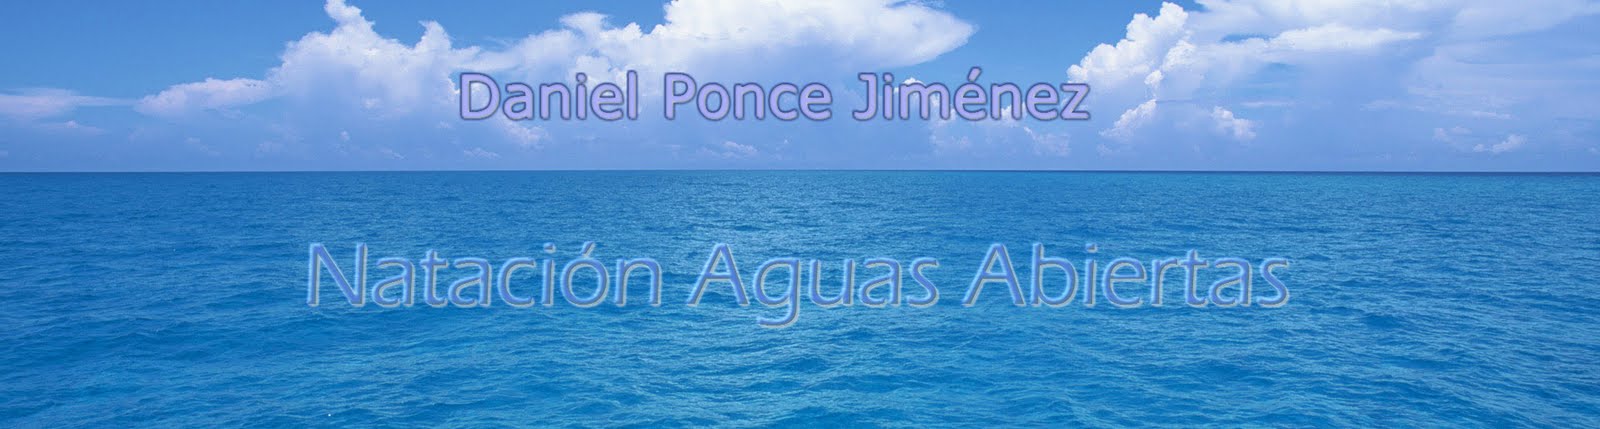 Natación Aguas Abiertas " Daniel Ponce Jiménez"